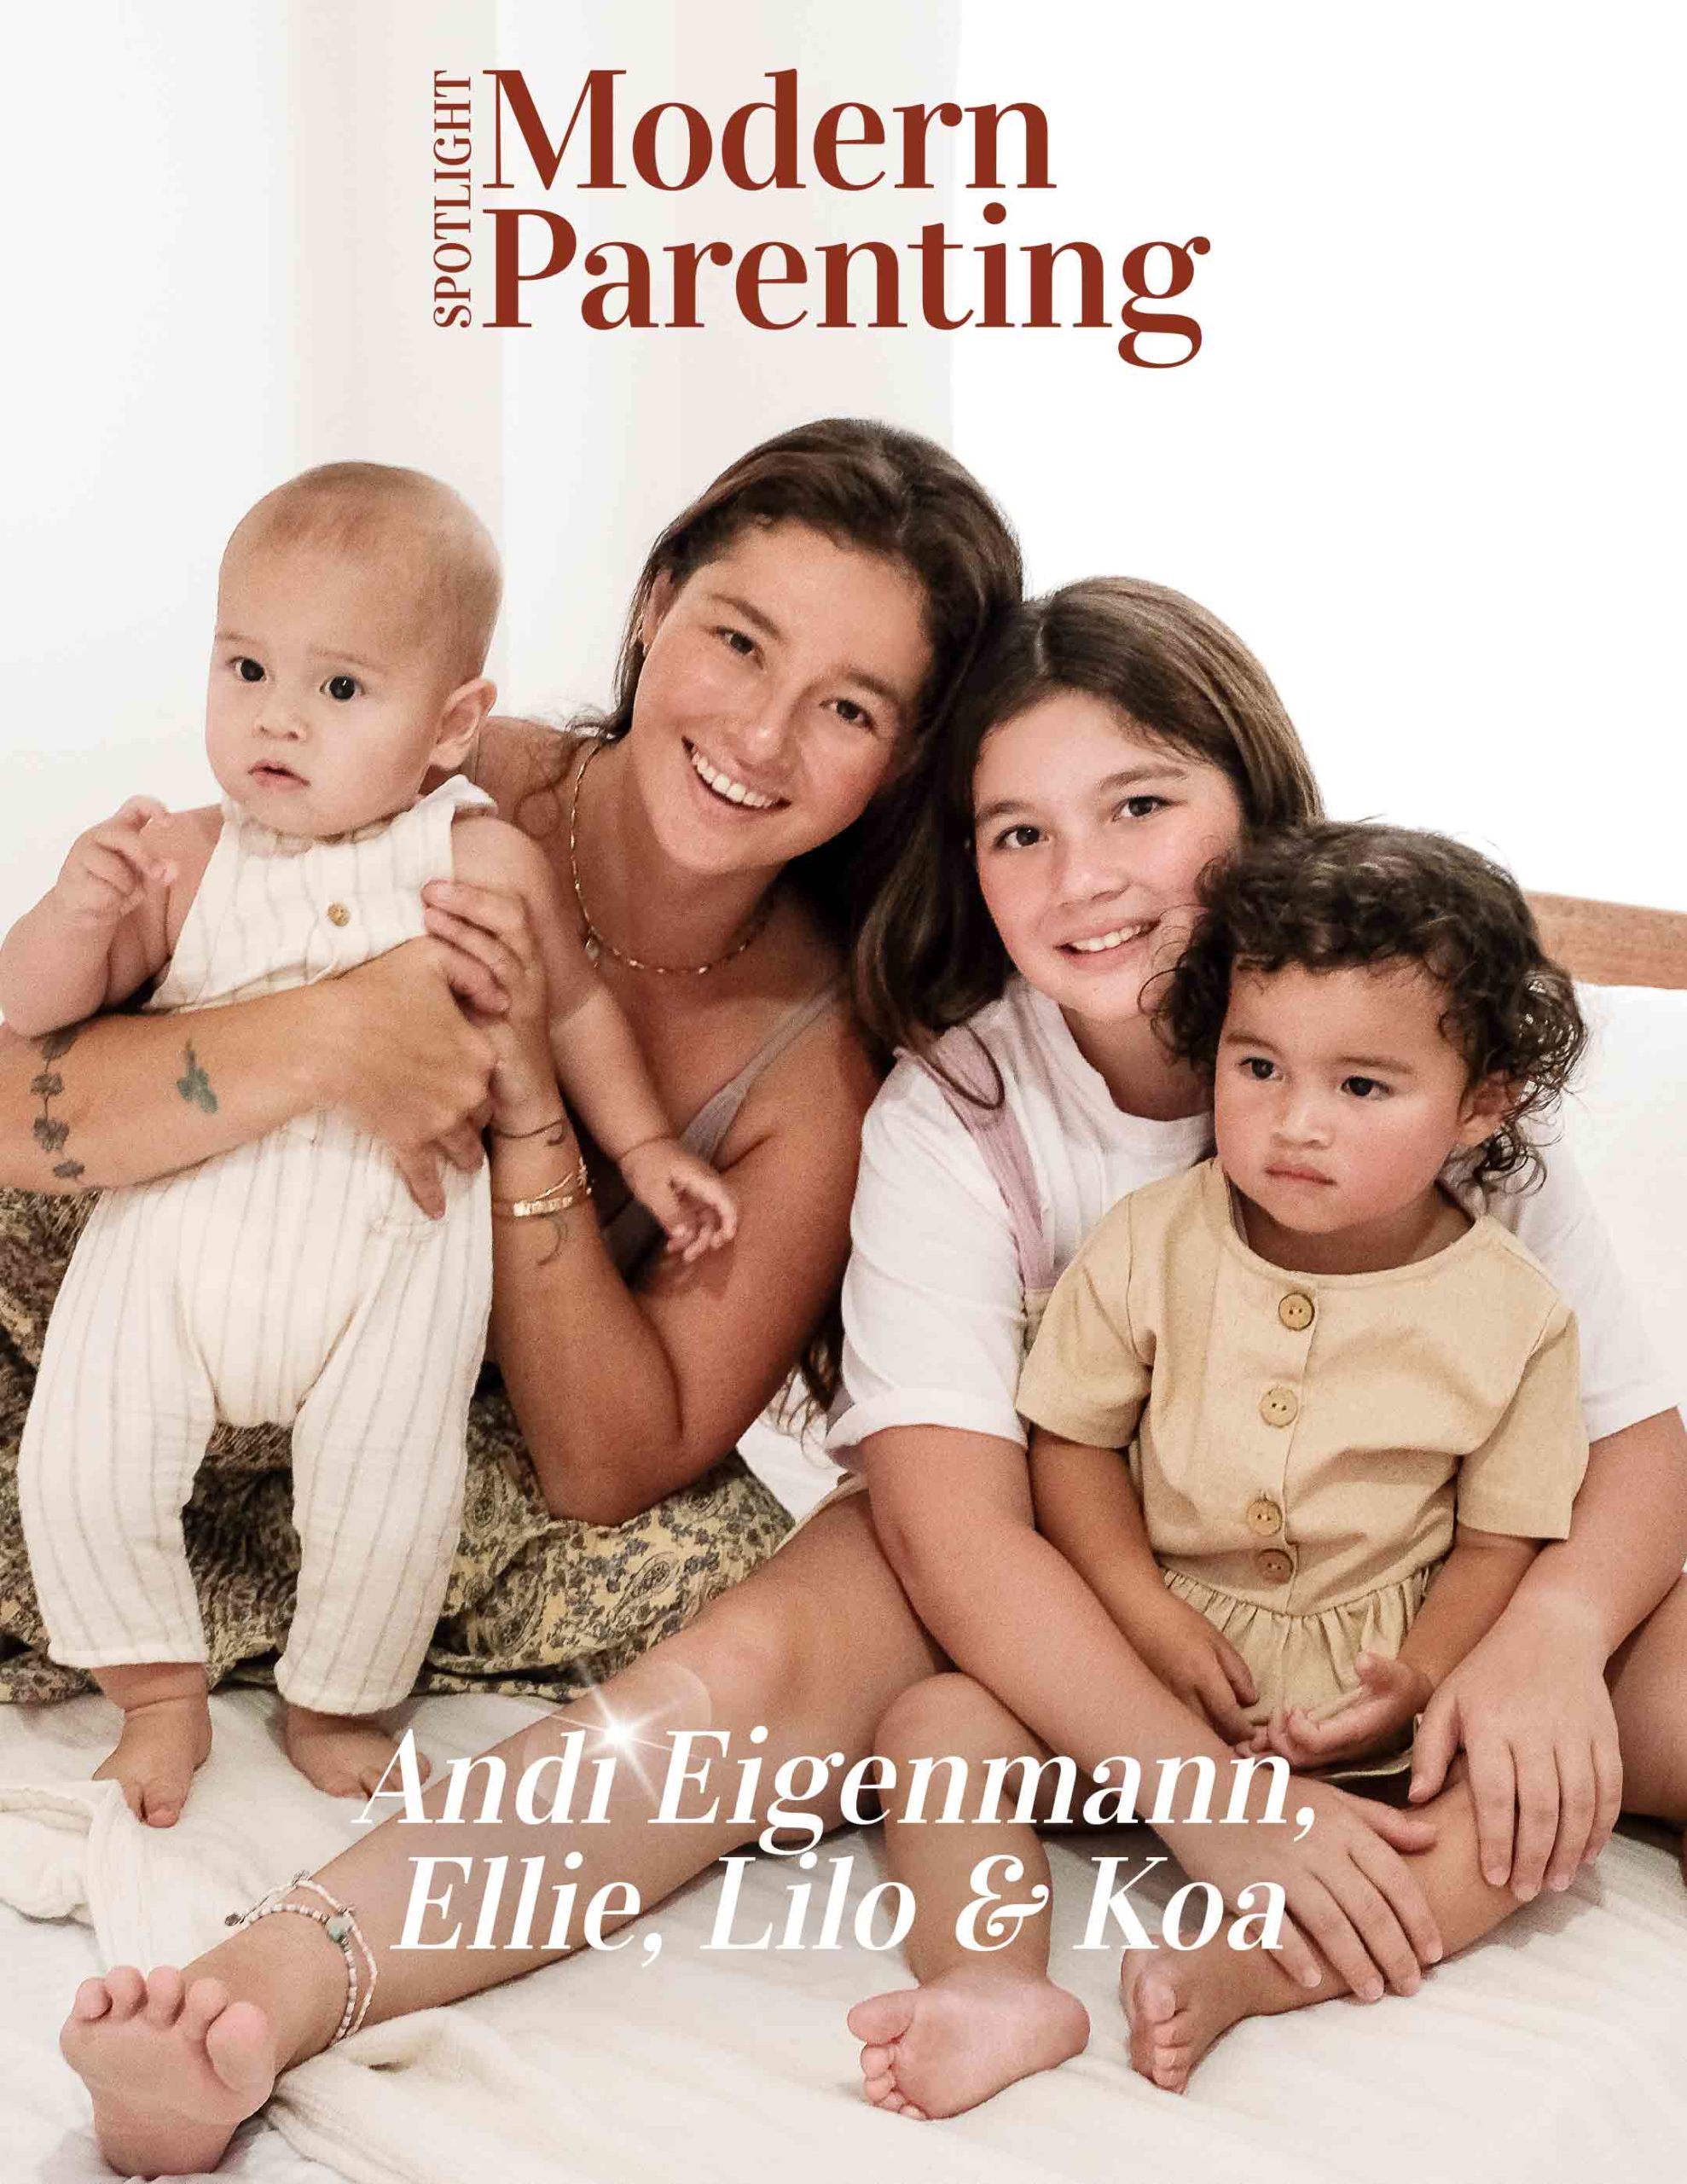 Andi Eigenmann with her three kids: Lilo, Koa, and Ellie